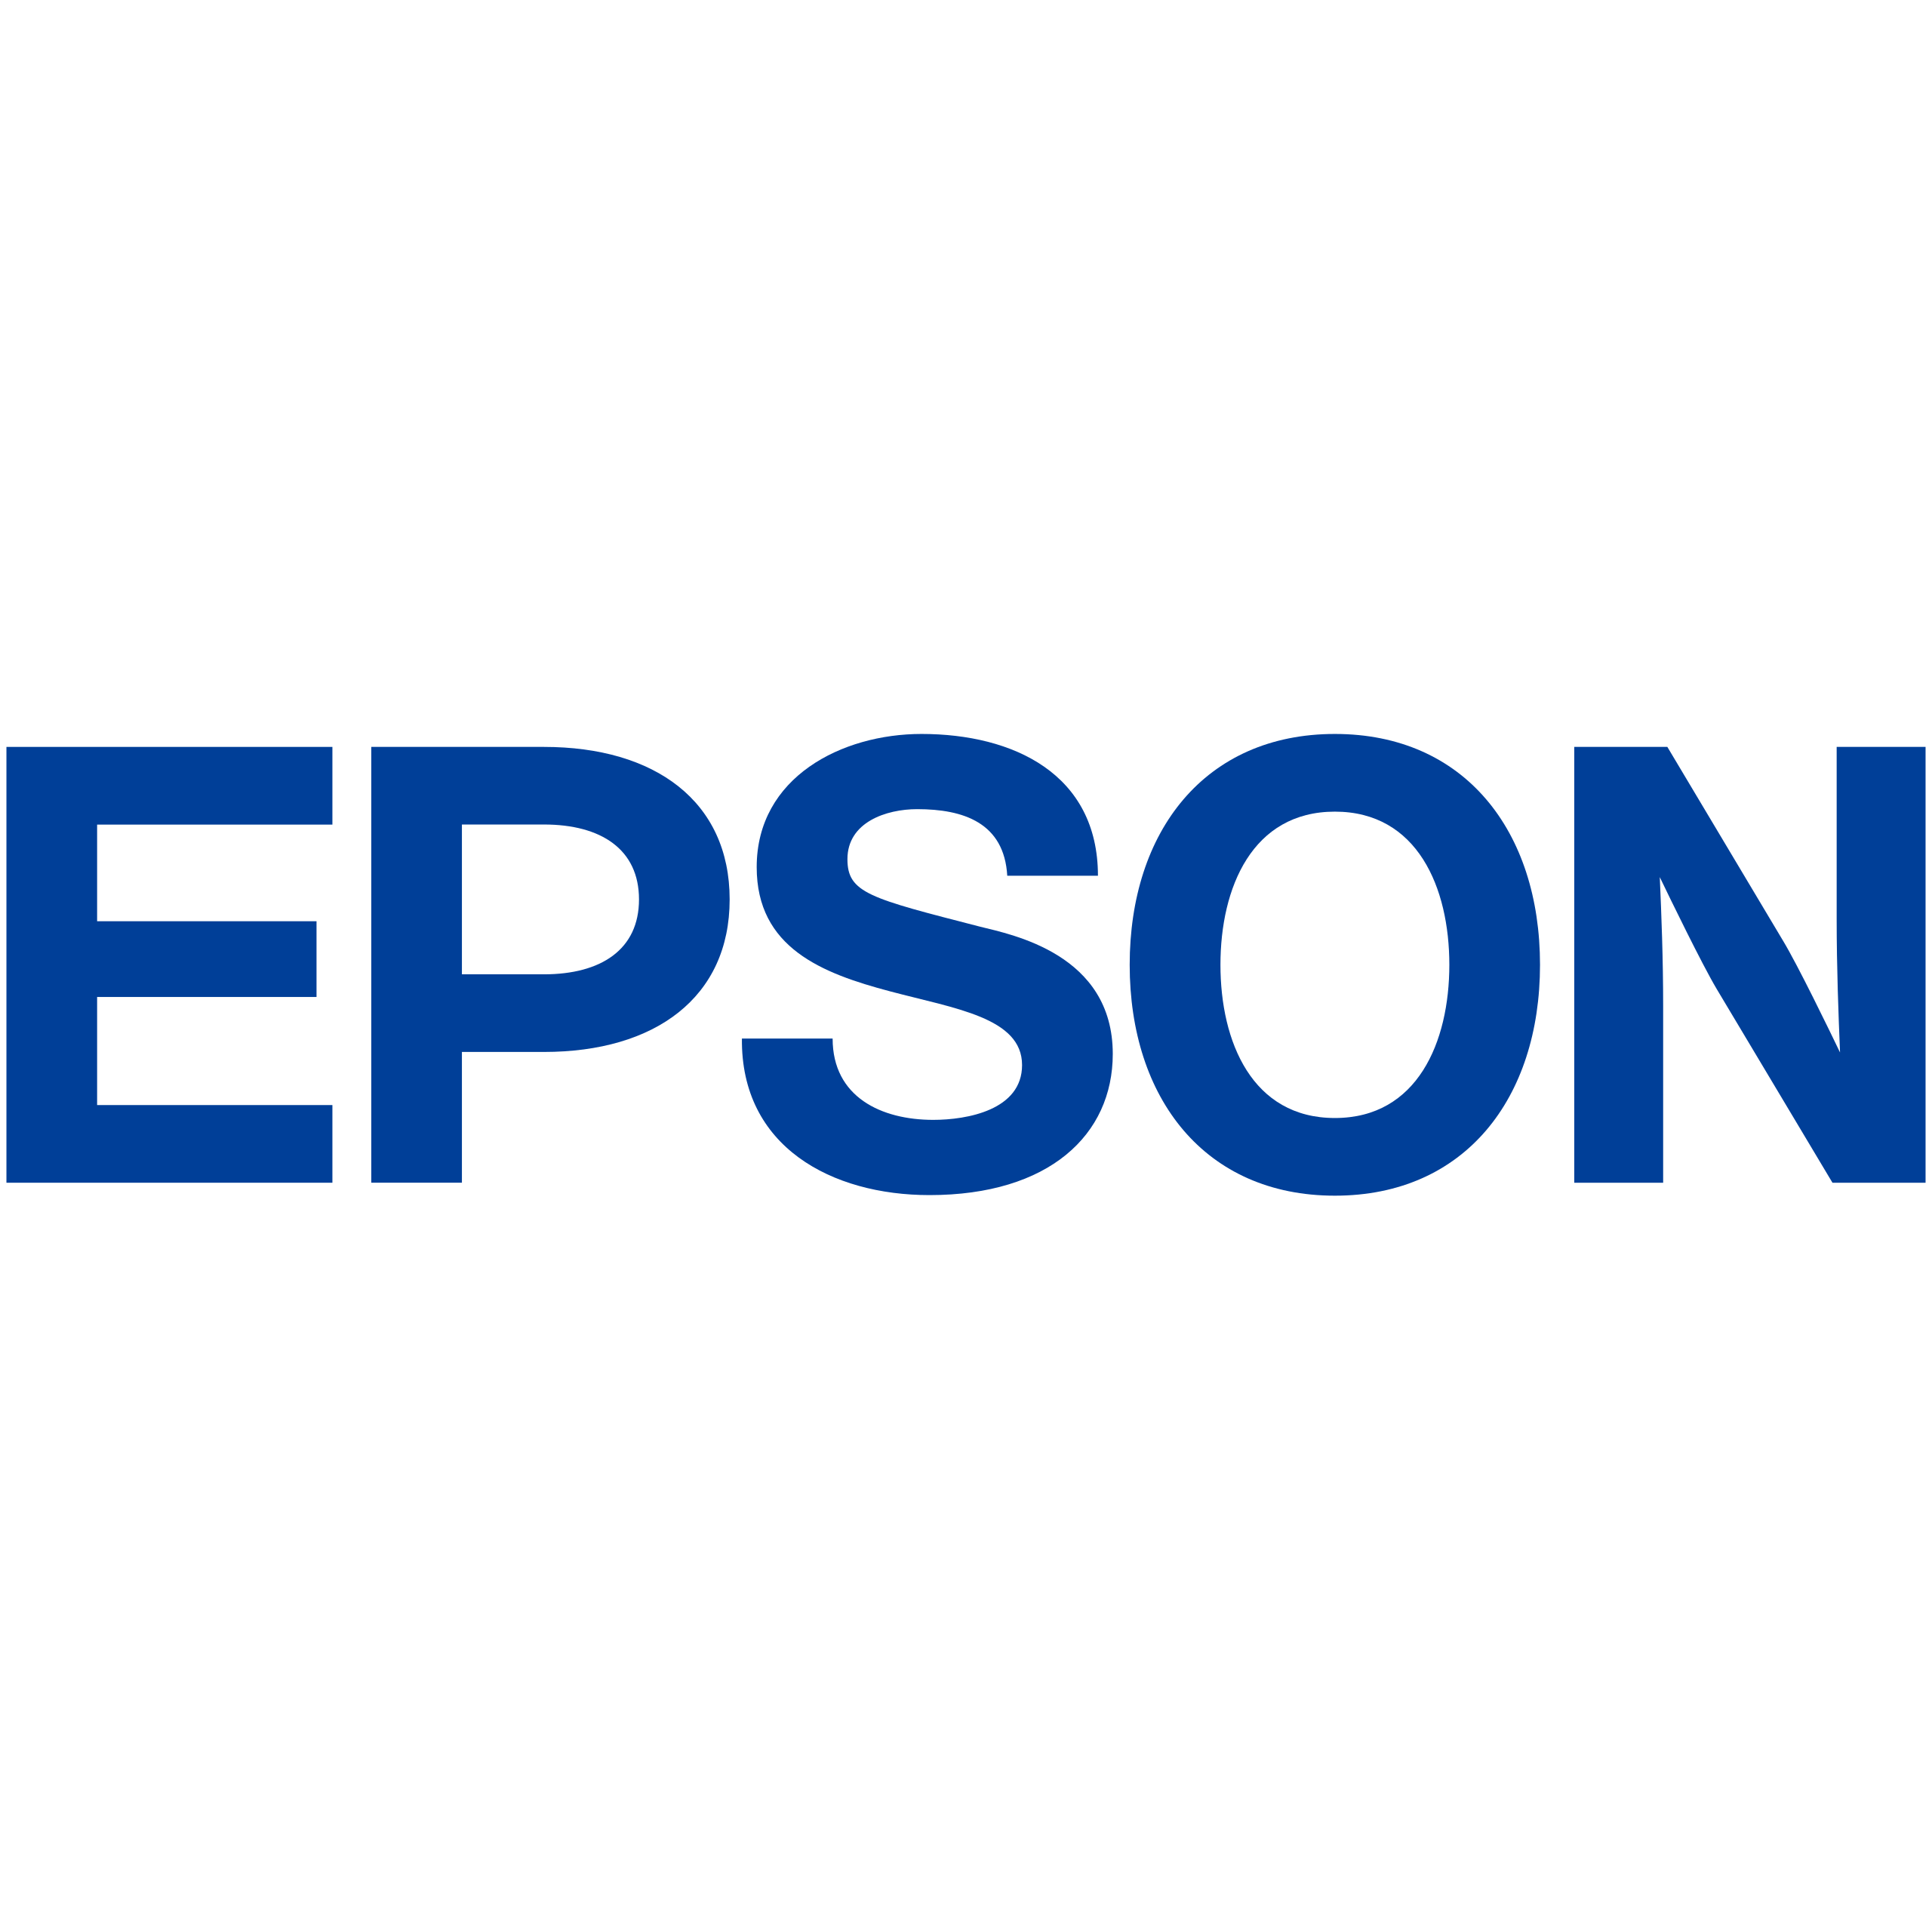 2560px-Epson_logo.svg